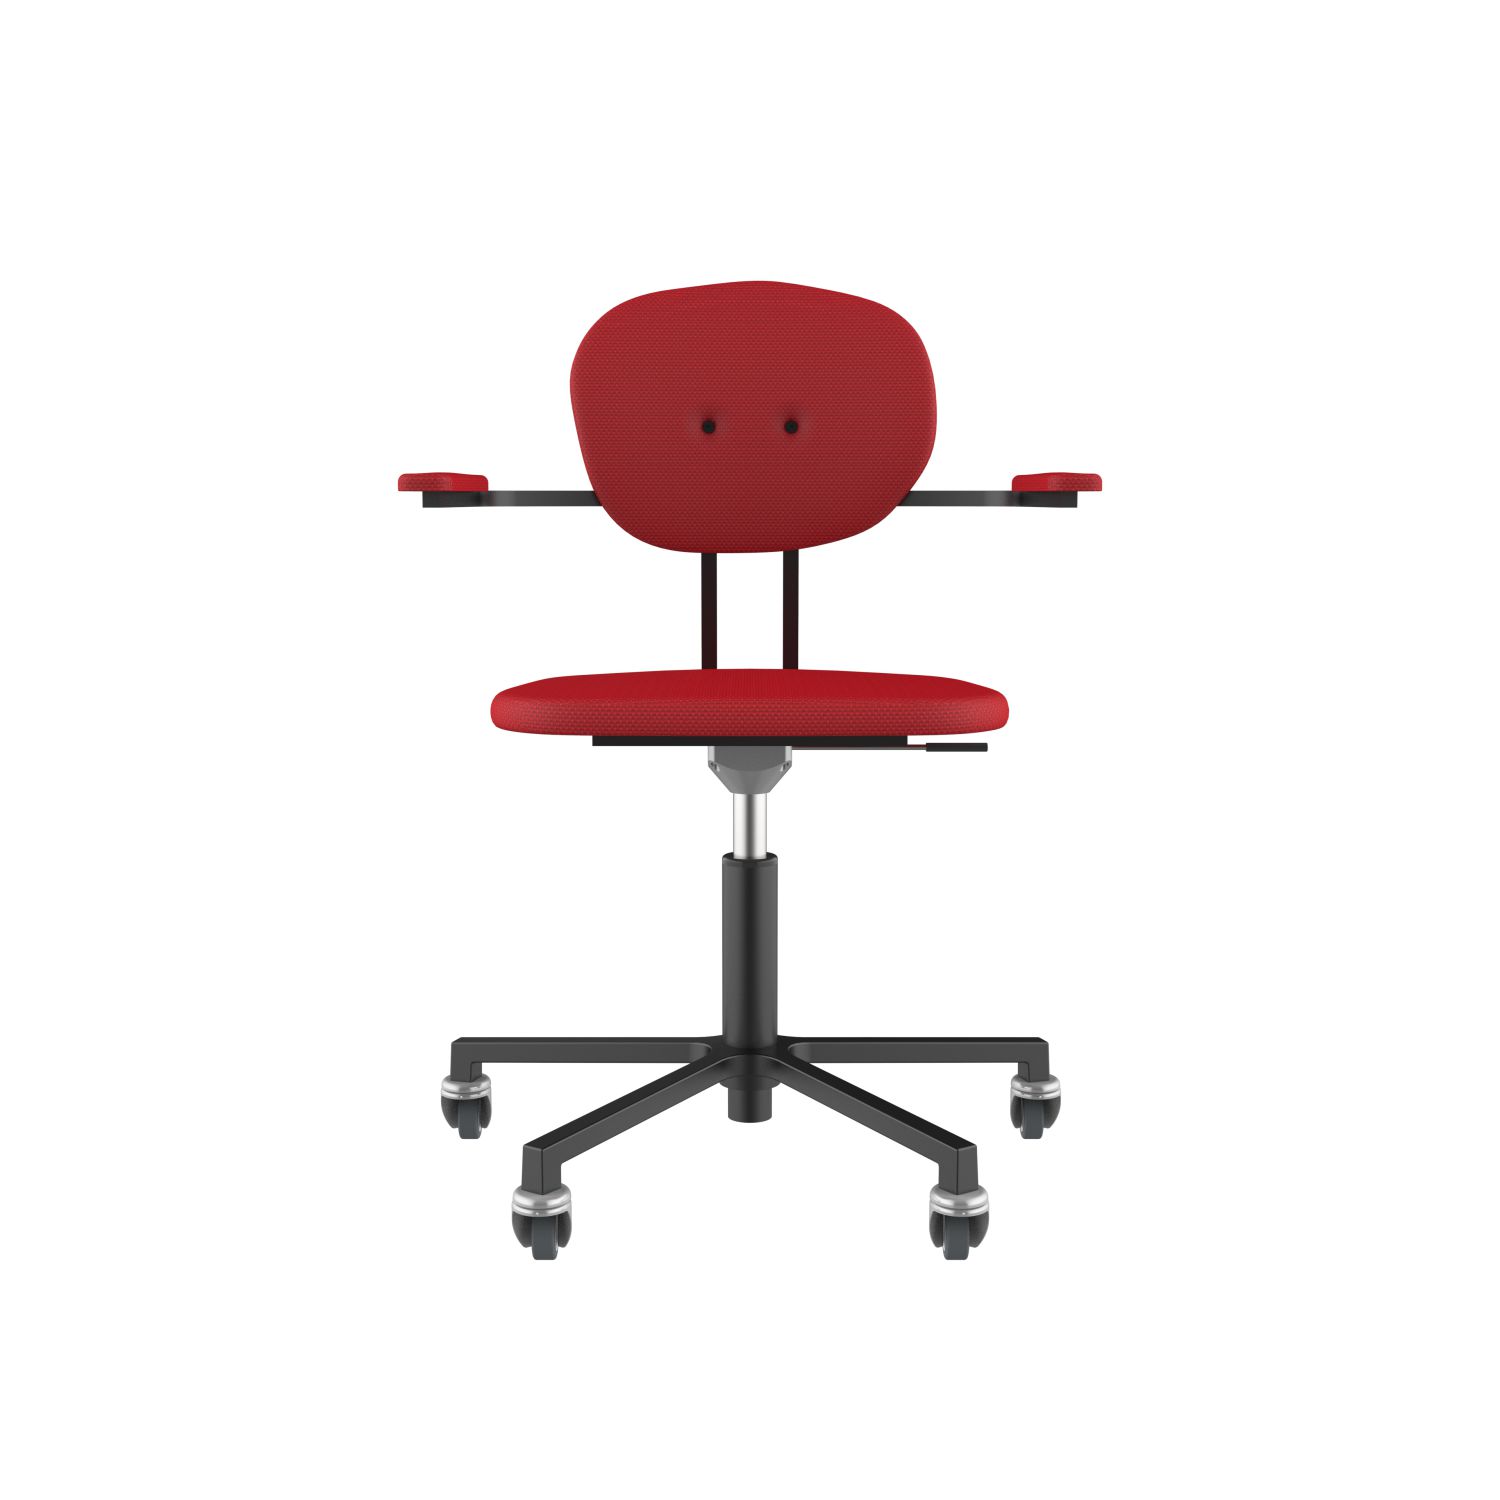 lensvelt maarten baas office chair with armrests backrest a grenada red 010 black ral9005 soft wheels